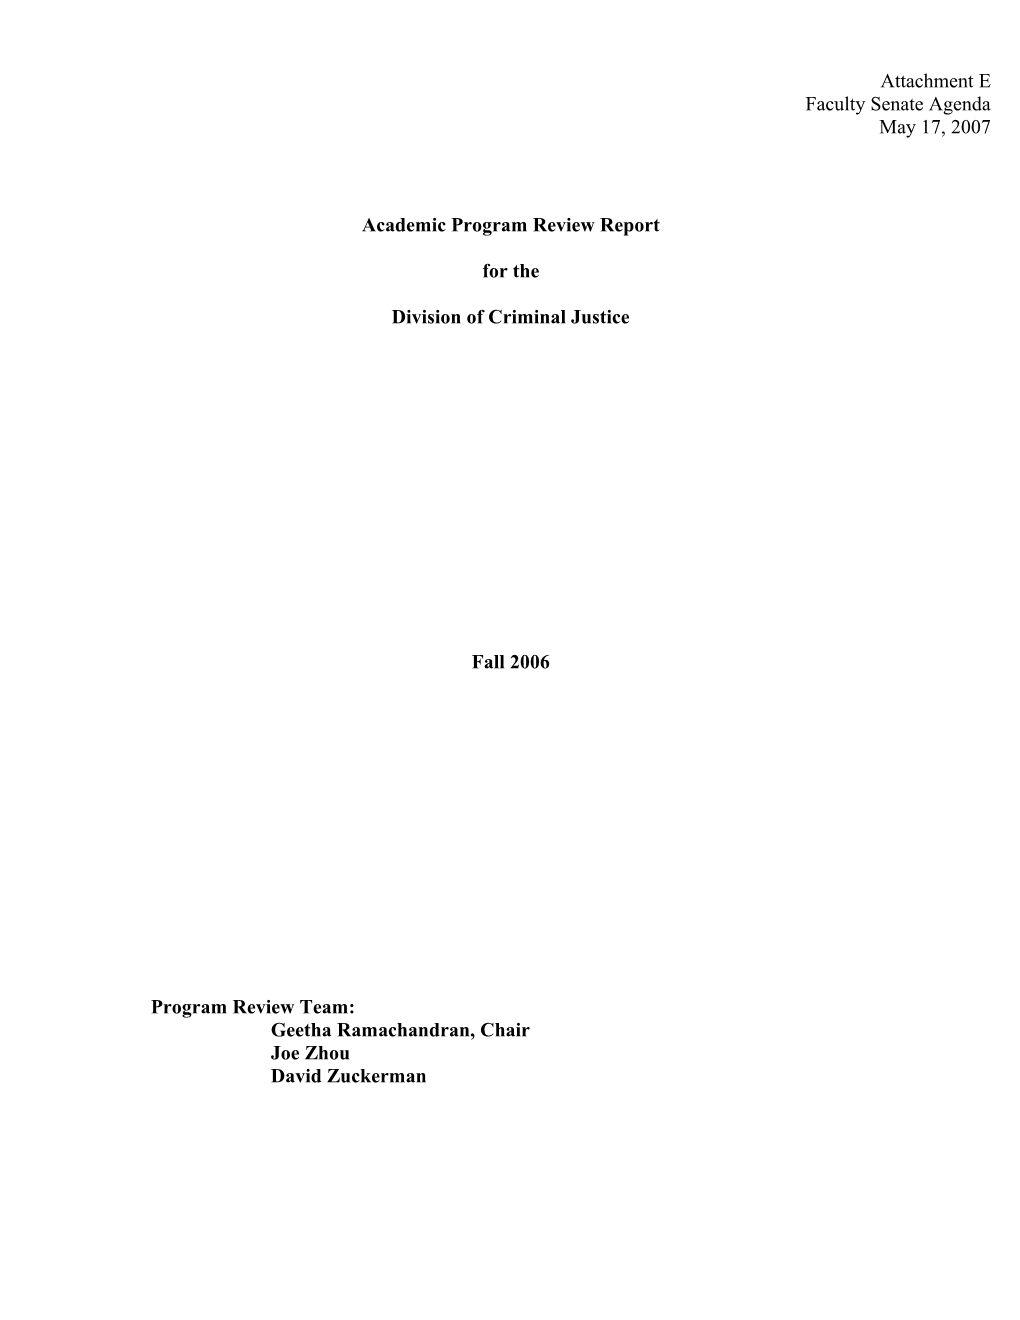 Academic Program Review Report s2